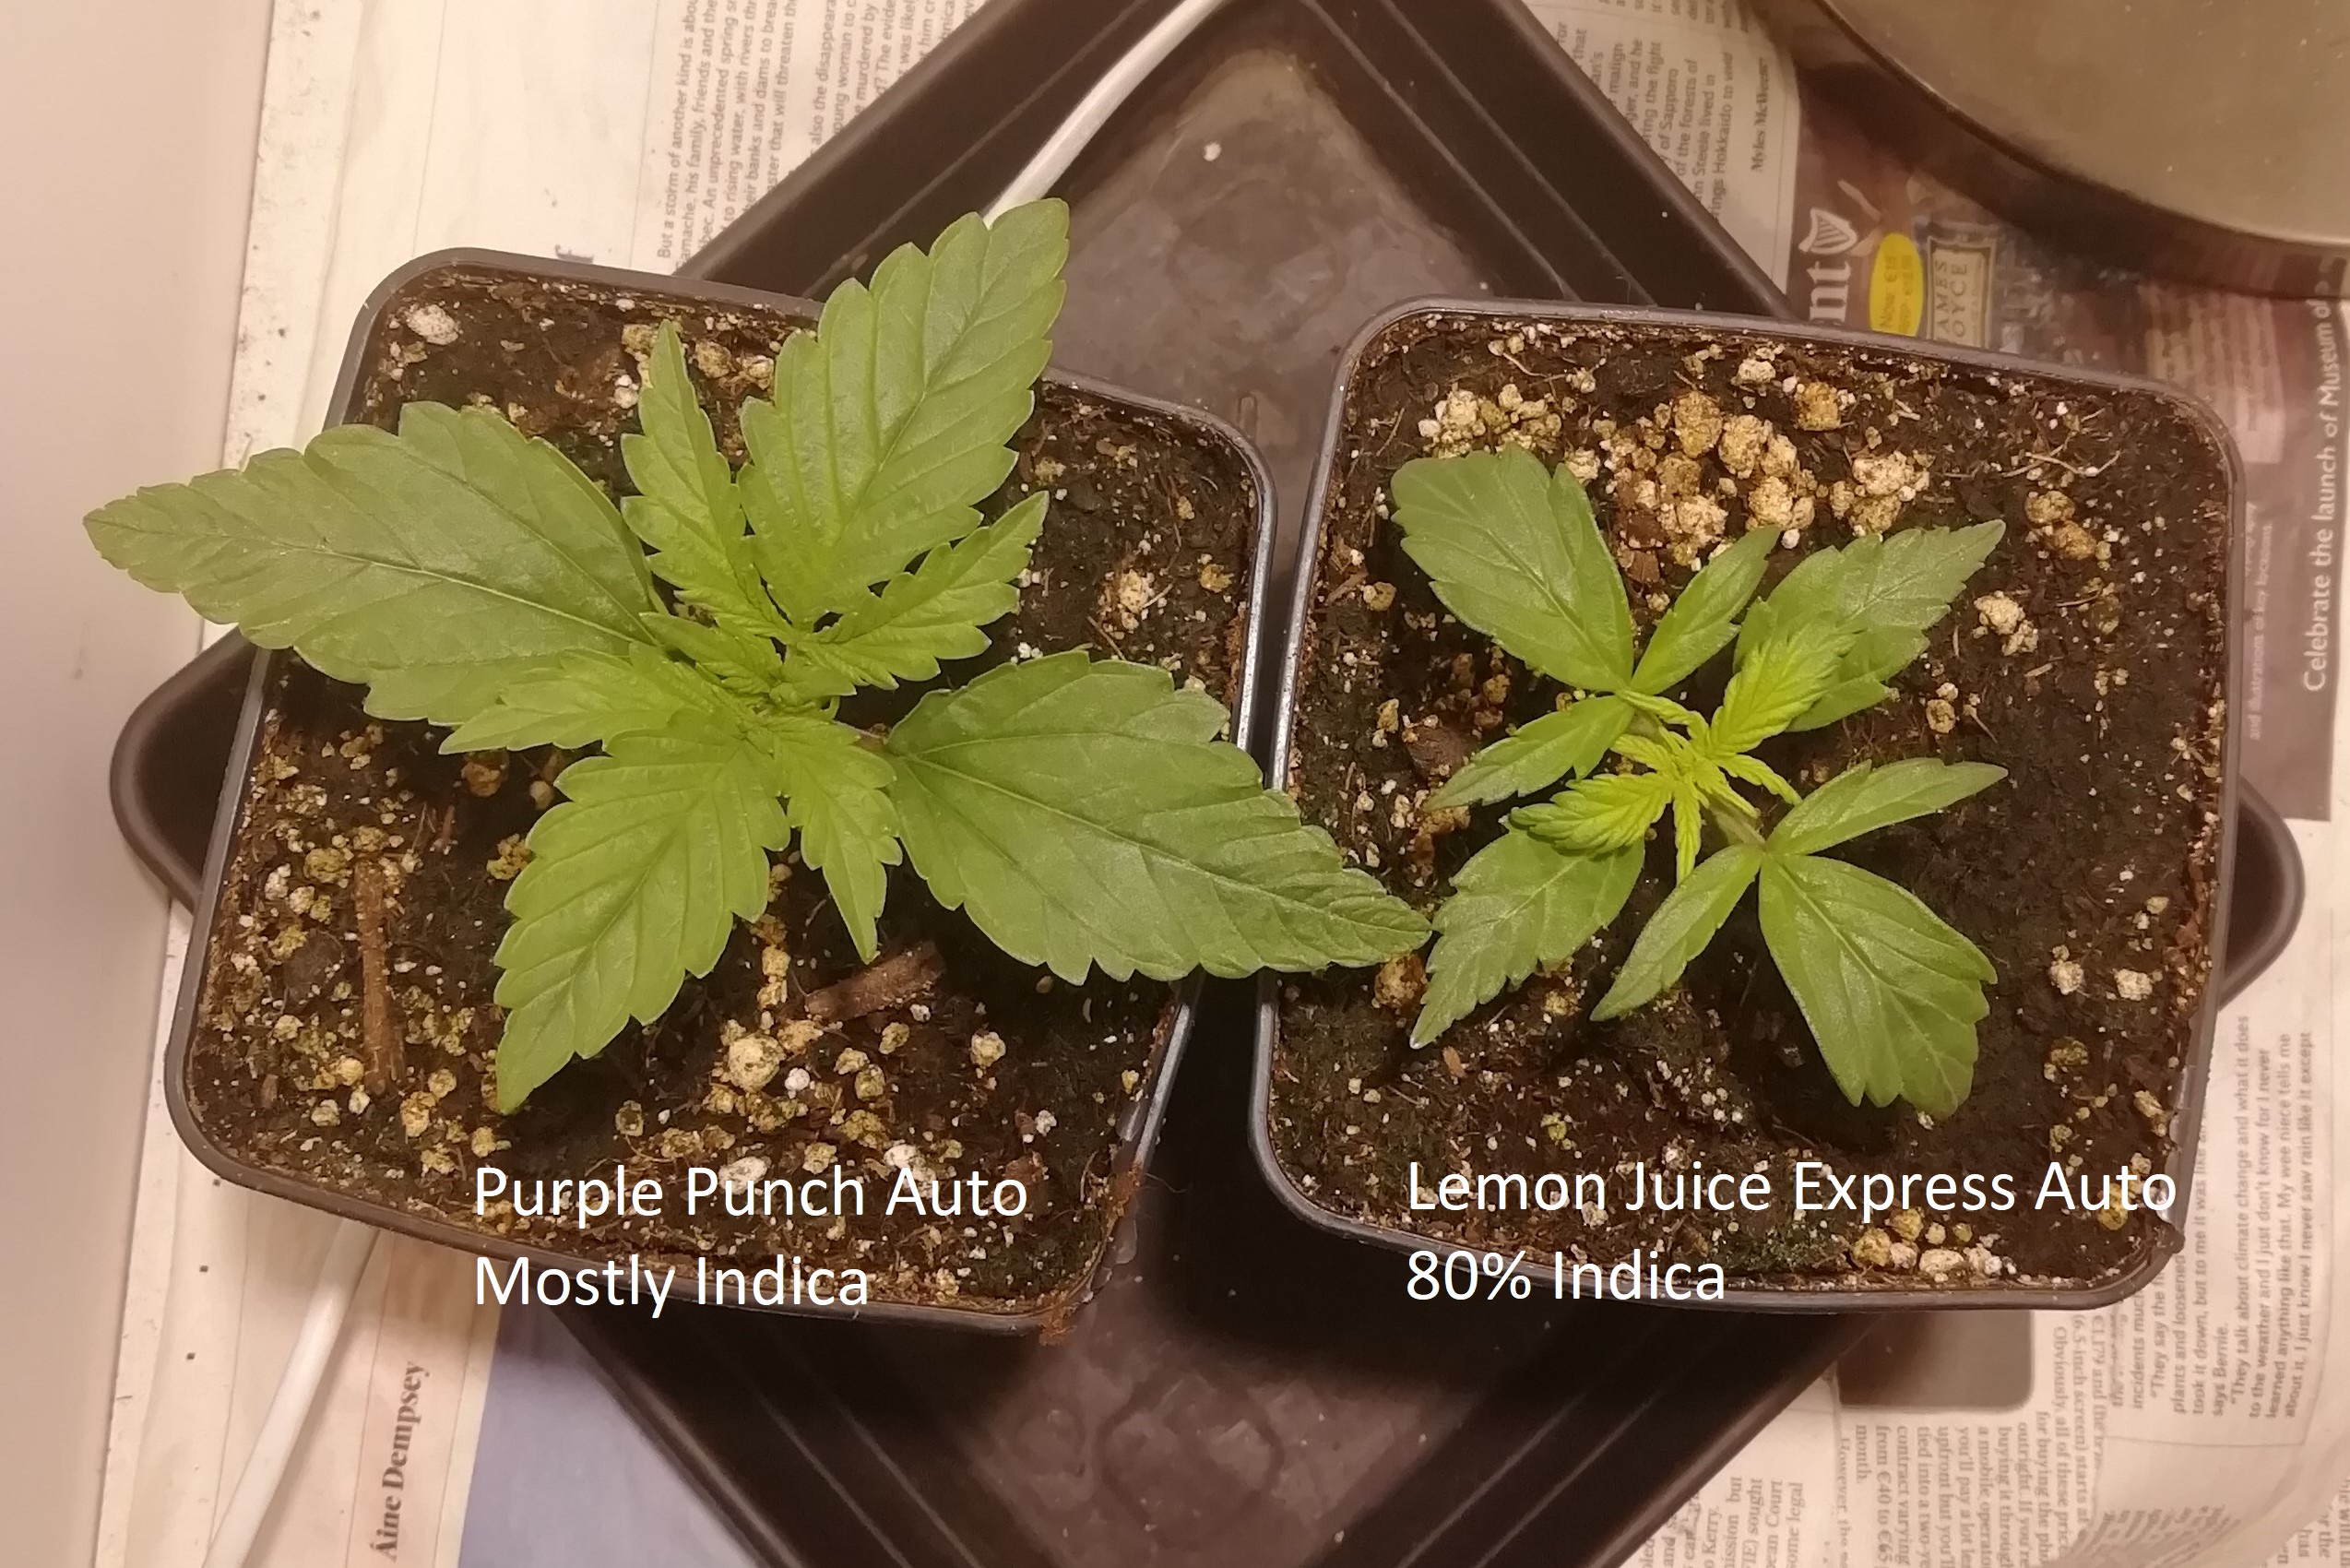 Purple Punch Auto & Lemon Juice Express Auto | Grasscity Forums - The #1  Marijuana Community Online